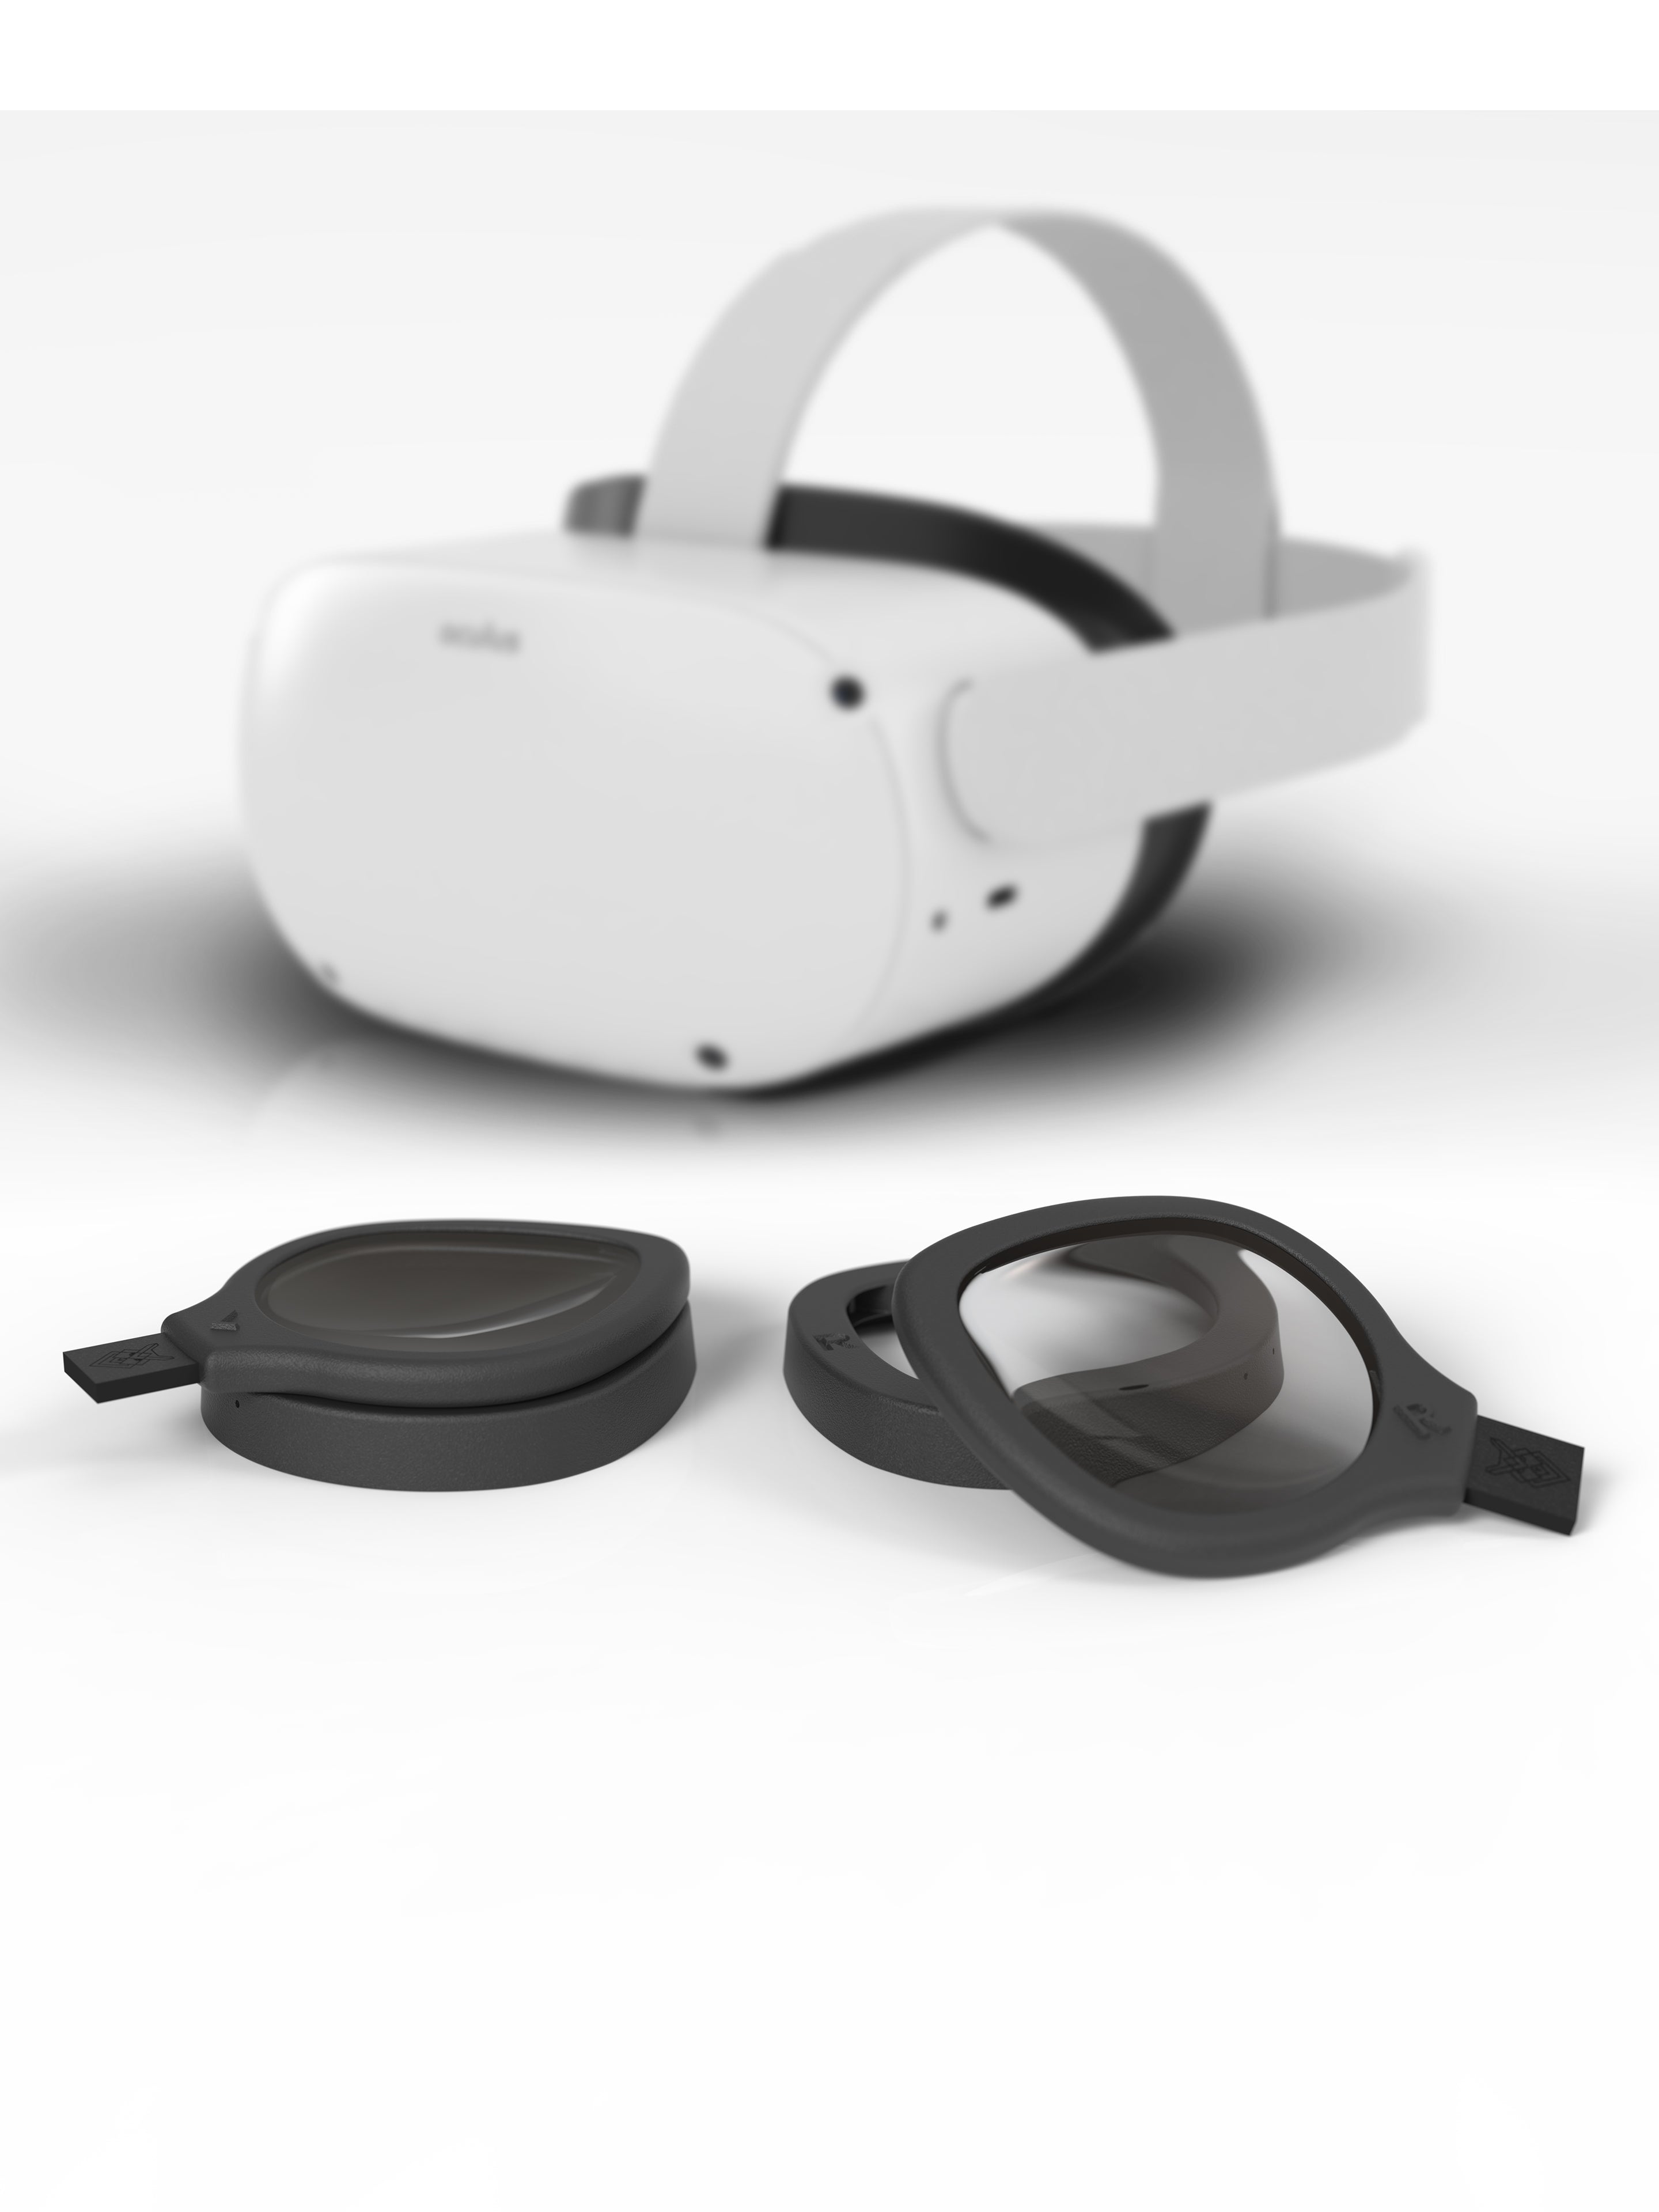 Reloptix Oculus/Meta Quest 1, Rift S, Go Non-Prescription Lens Insert Kit